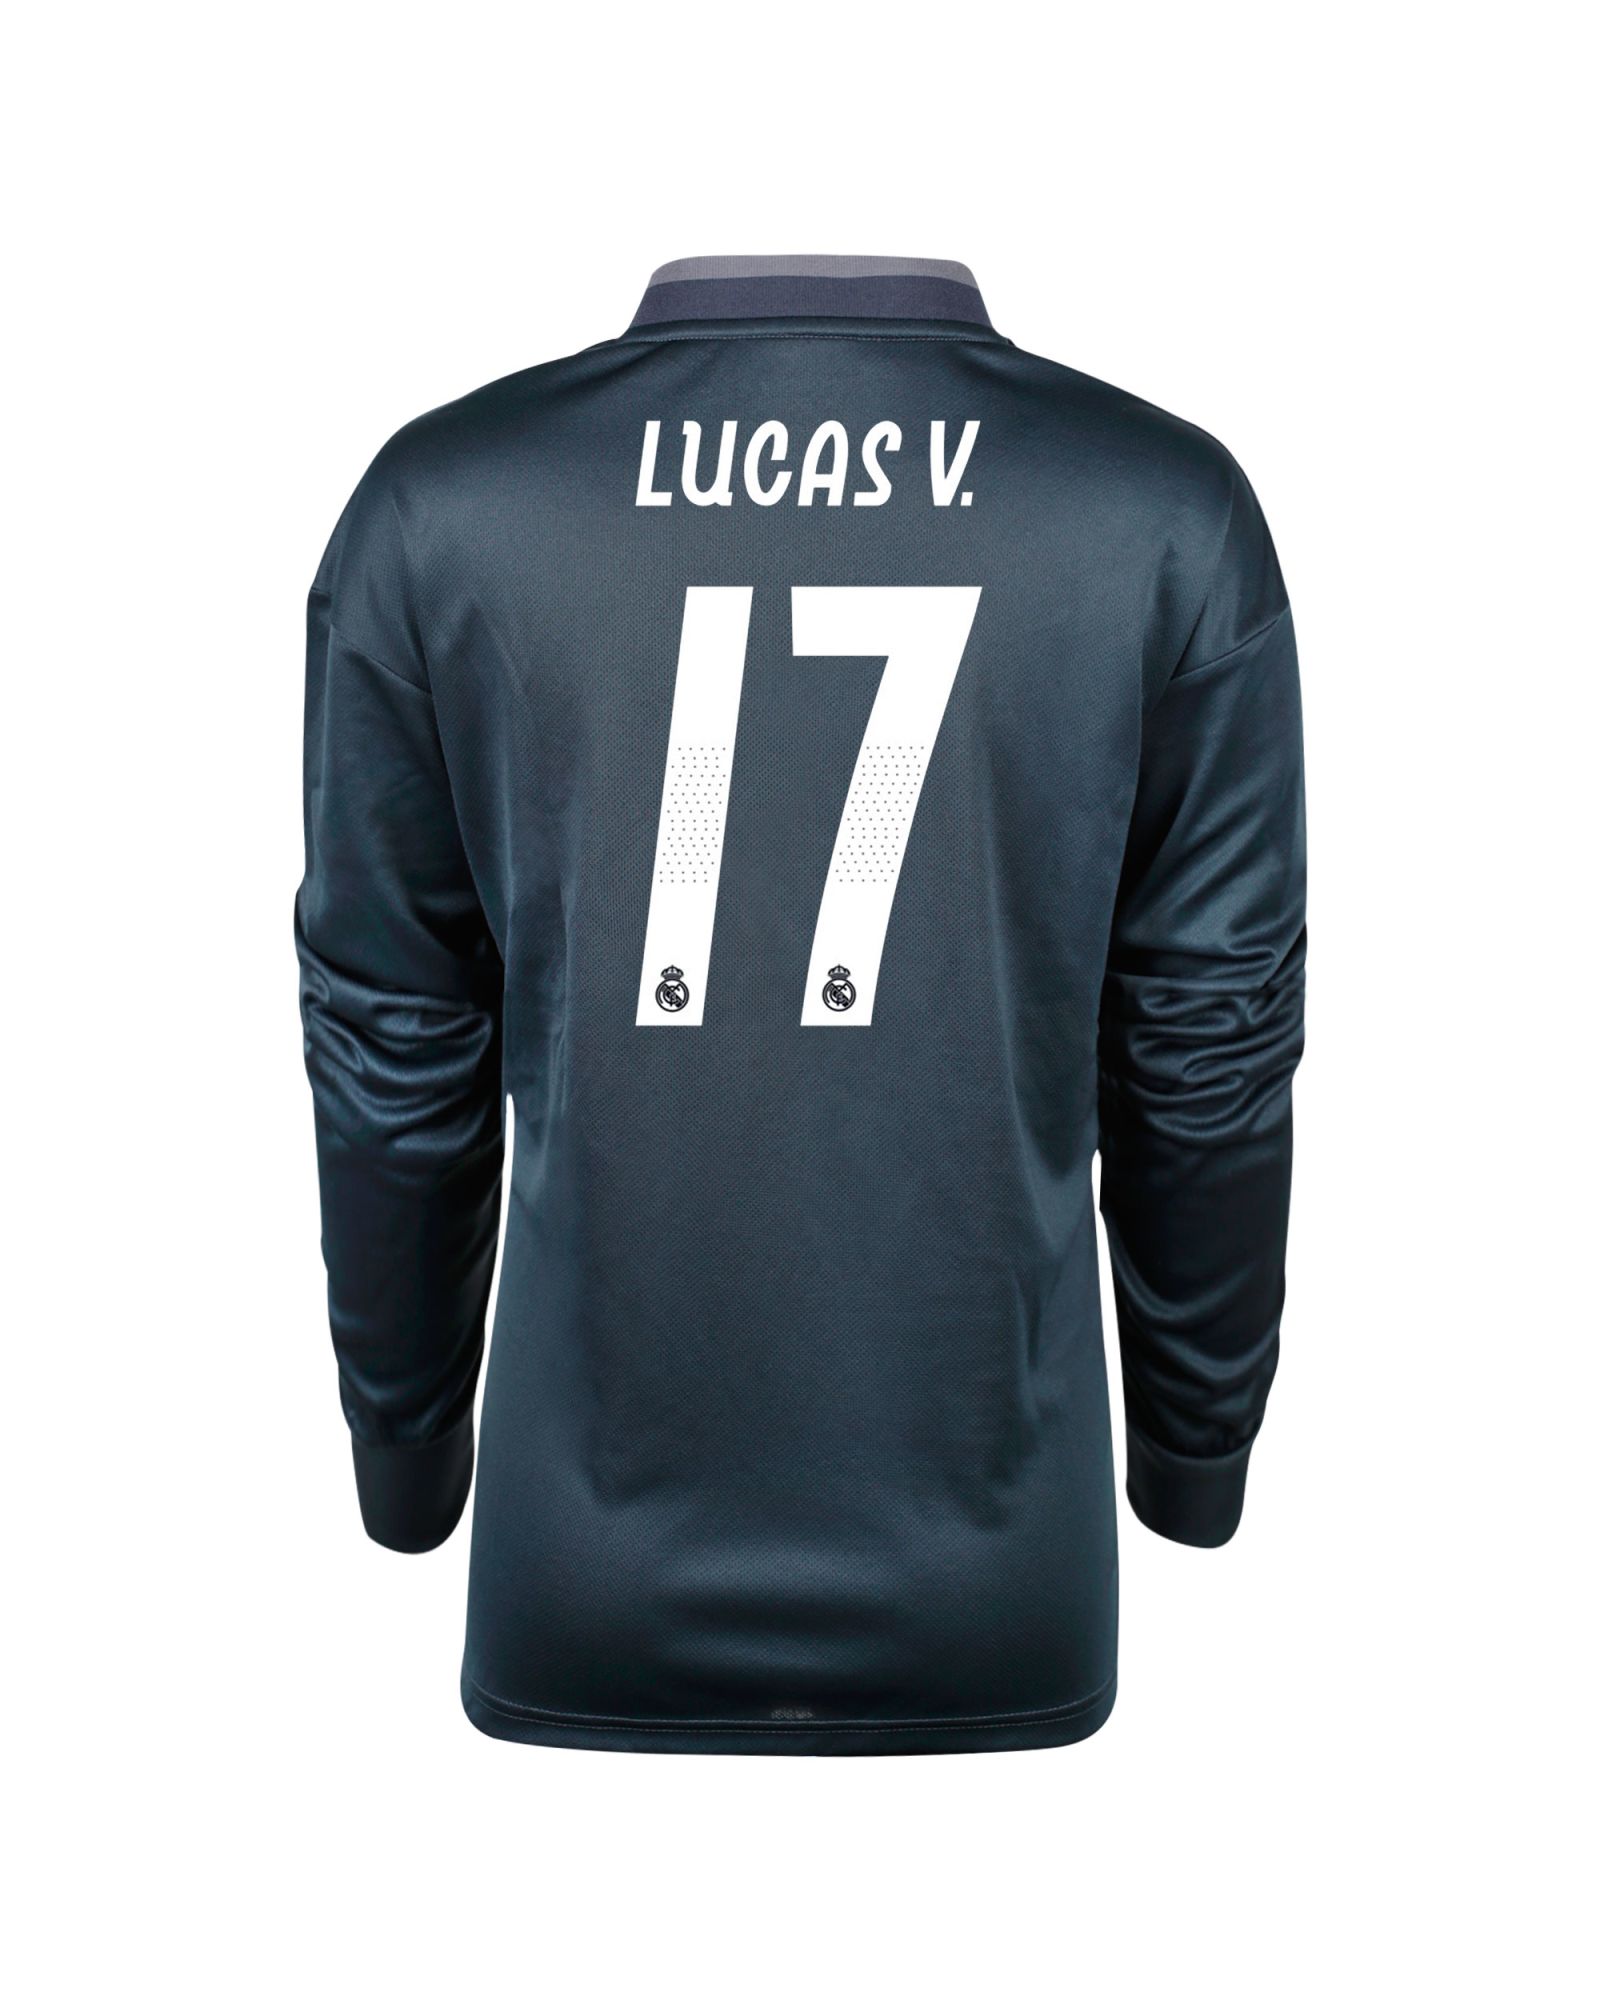 Camiseta 2ª Real Madrid 2018/2019 Lucas Vázquez Manga Larga Junior Gris - Fútbol Factory